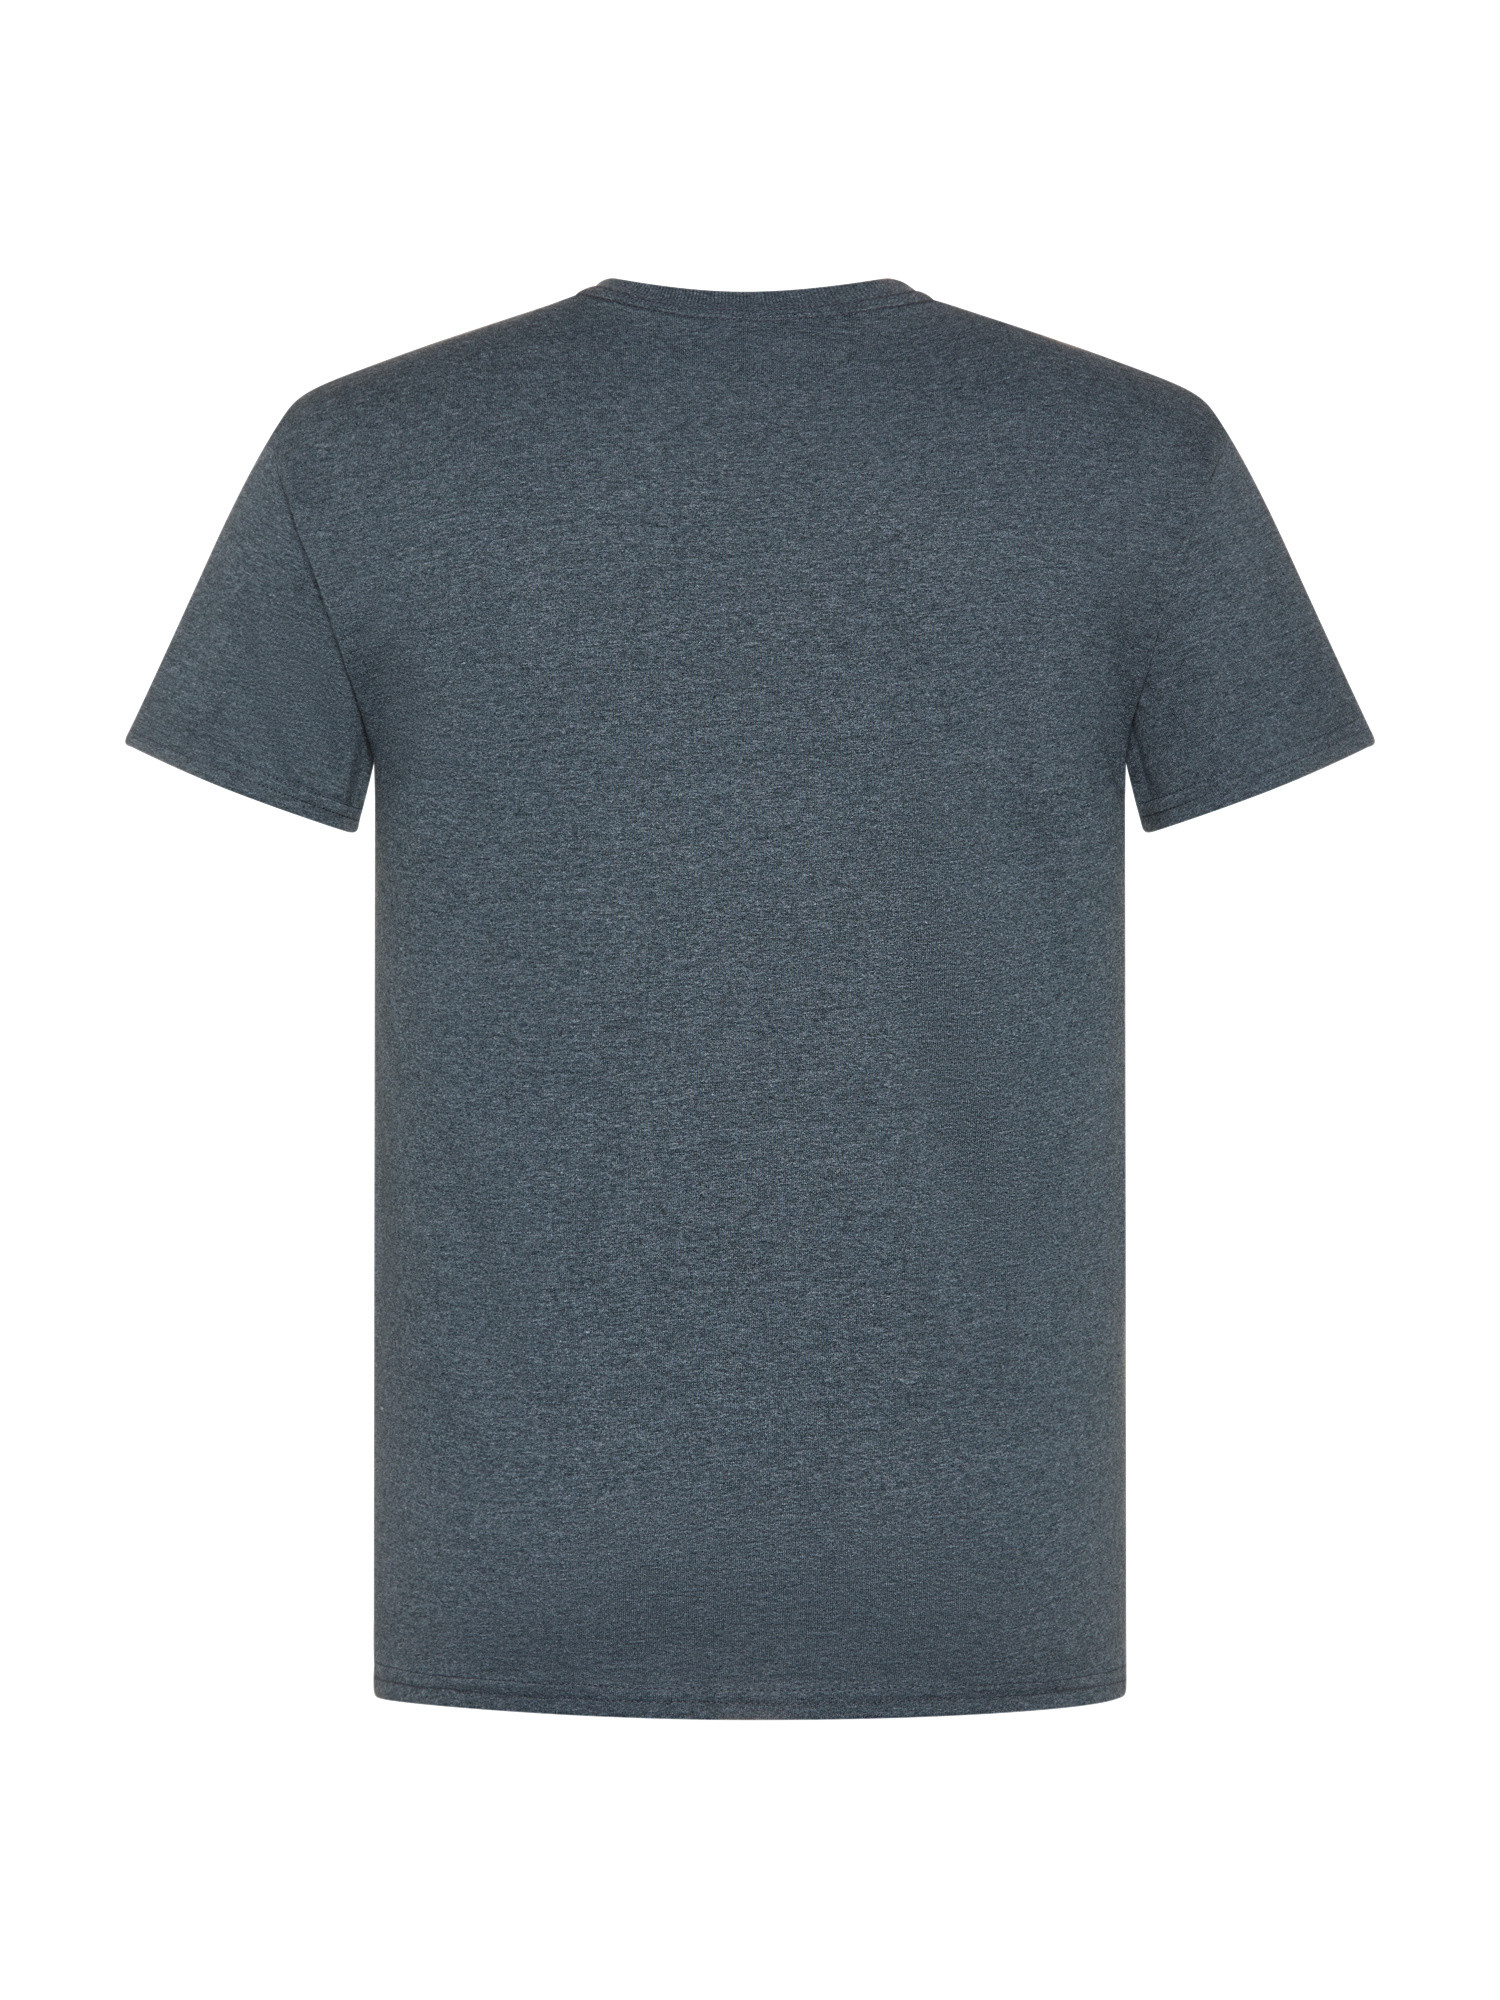 Thrasher - Flames logo T-Shirt, Dark Grey, large image number 1